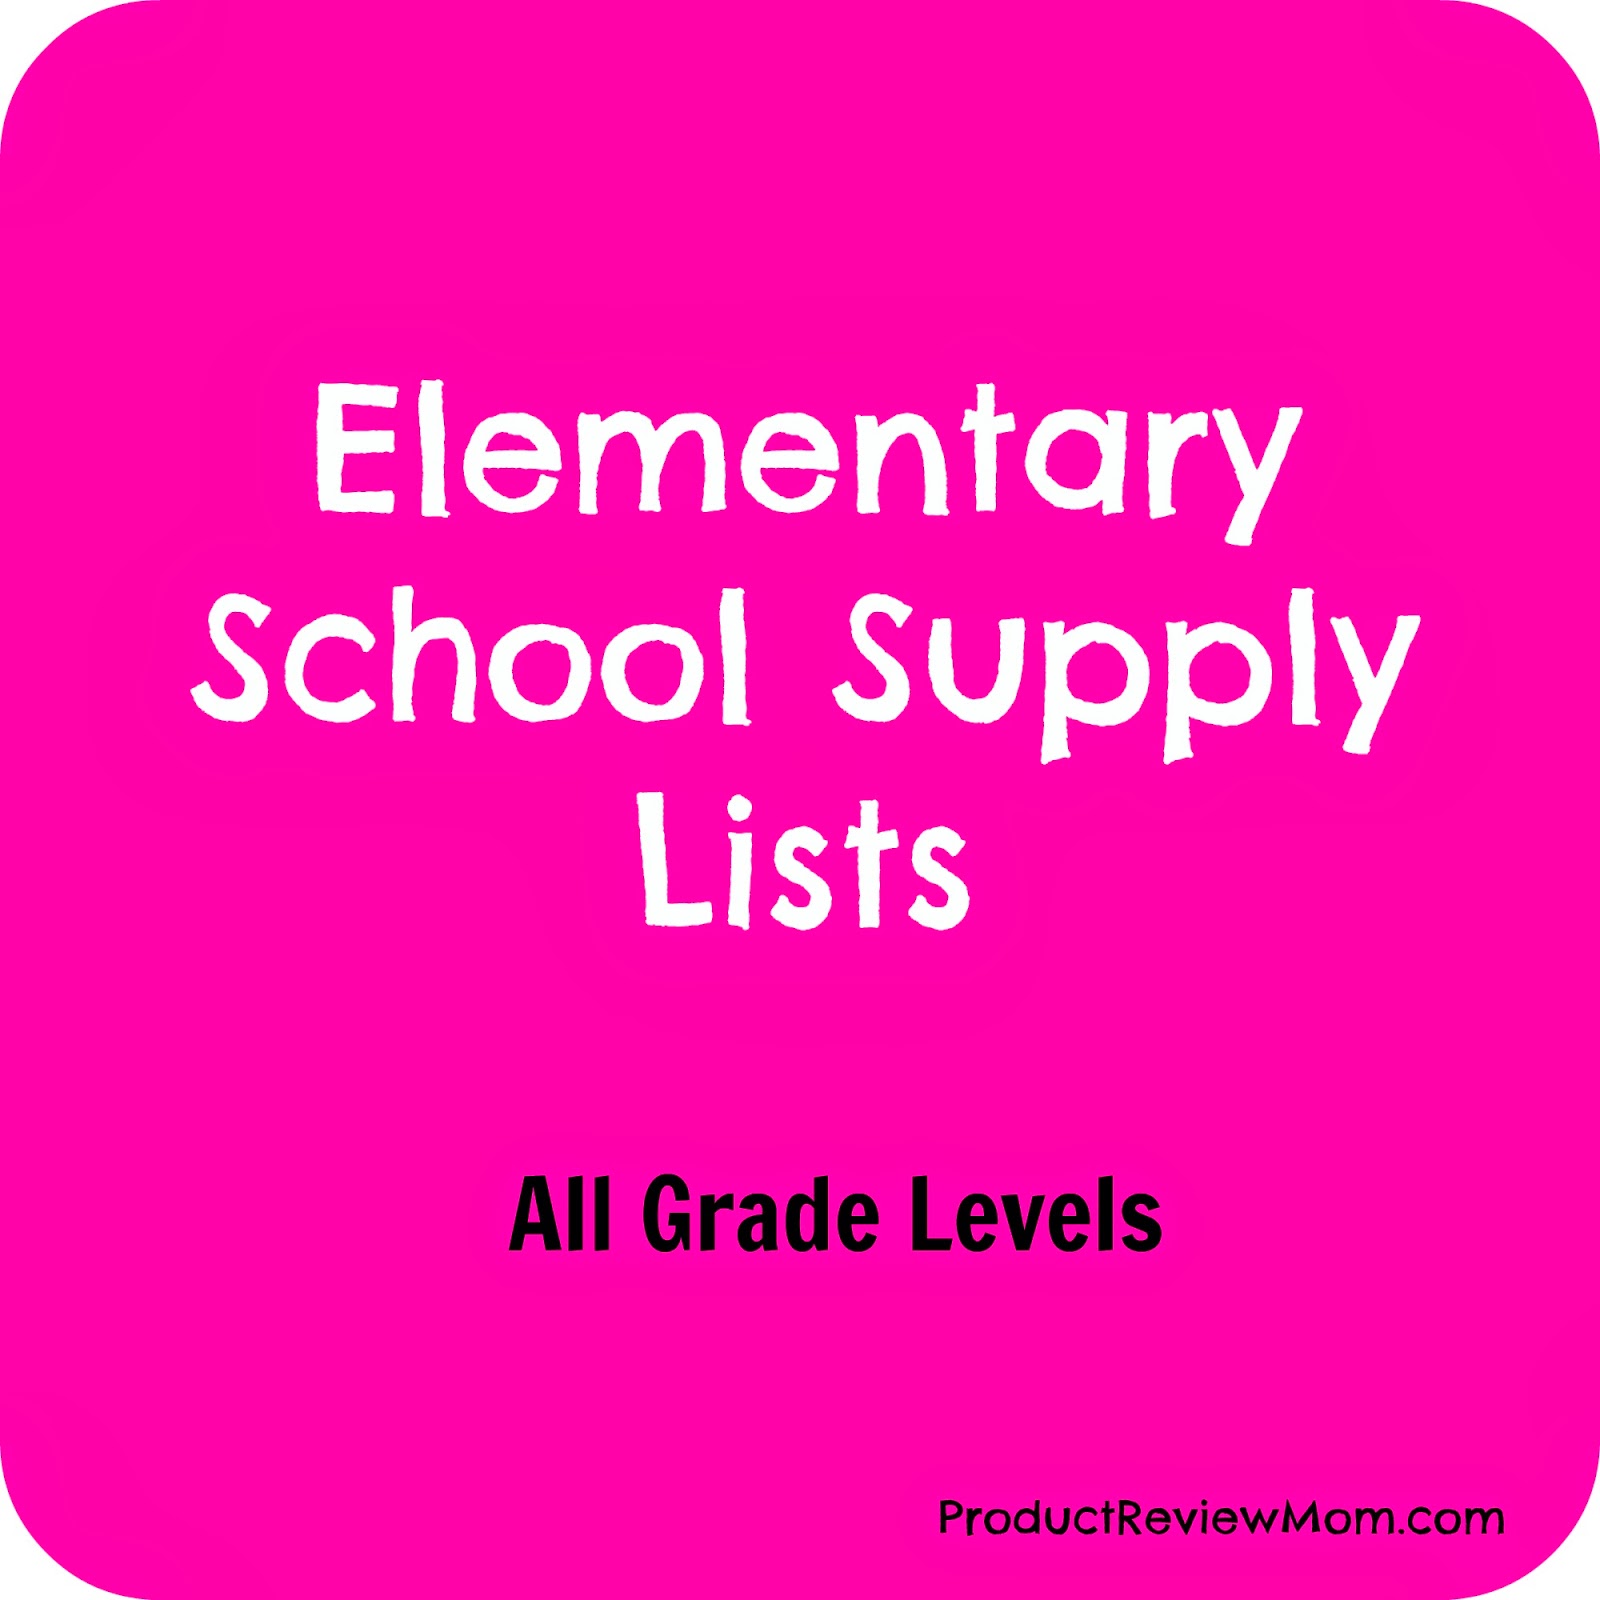 Elementary School Supply Lists for All Grade Levels #BacktoSchool #BacktoSchoolSupplies via ProductReviewMom.com